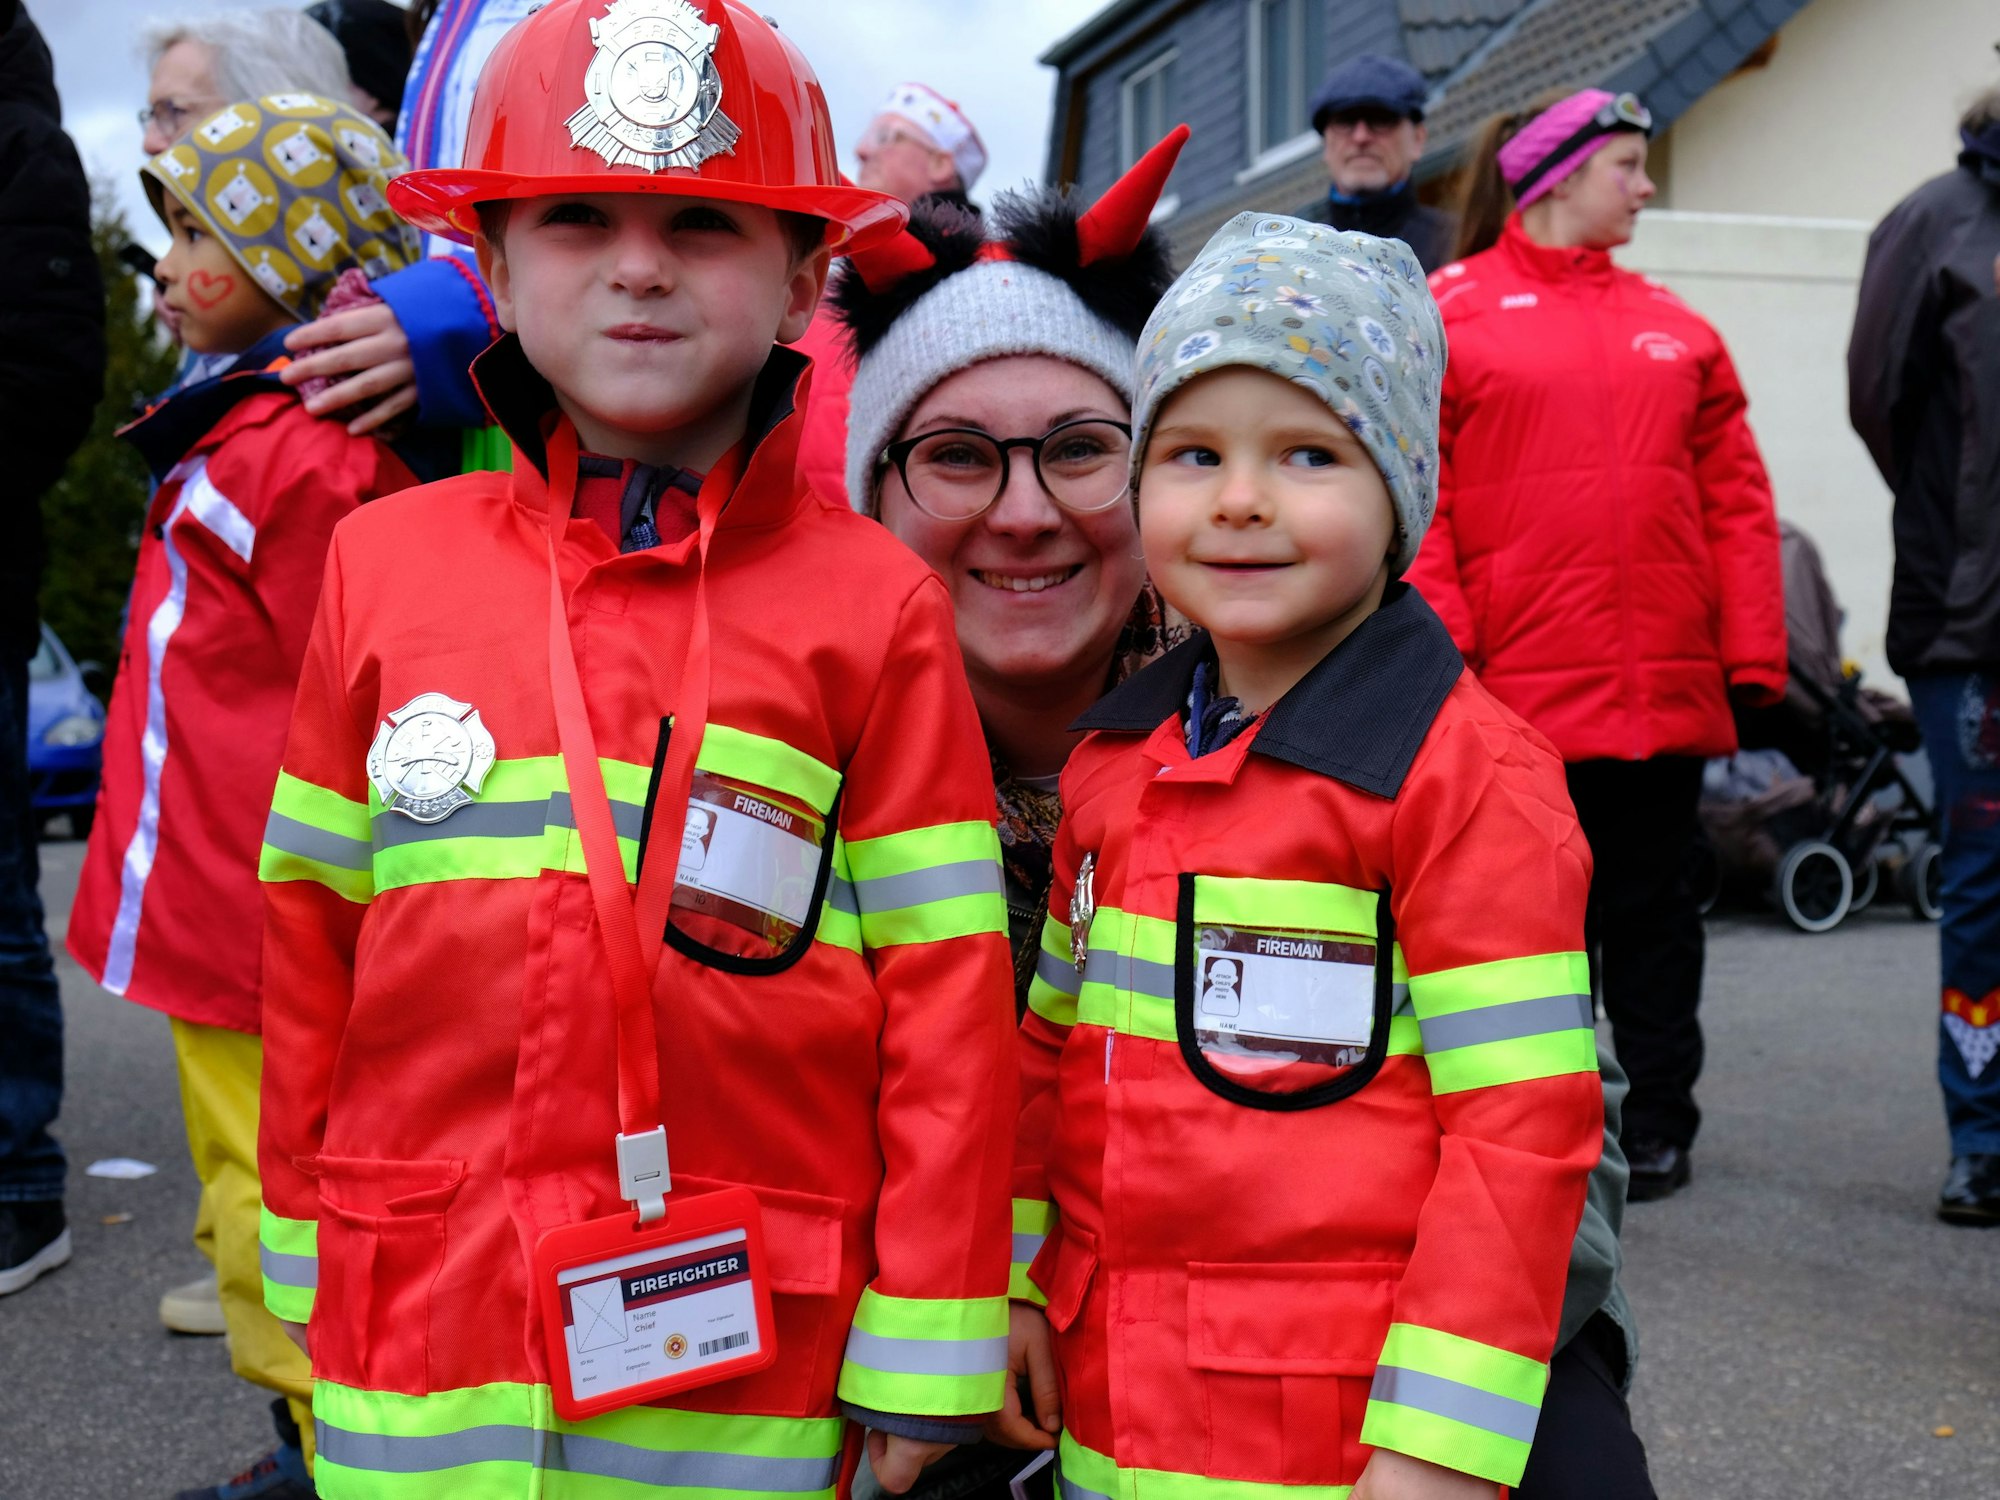 Zwei Jungs aus Vussem sind als Feuerwehrmänner verkleidet.